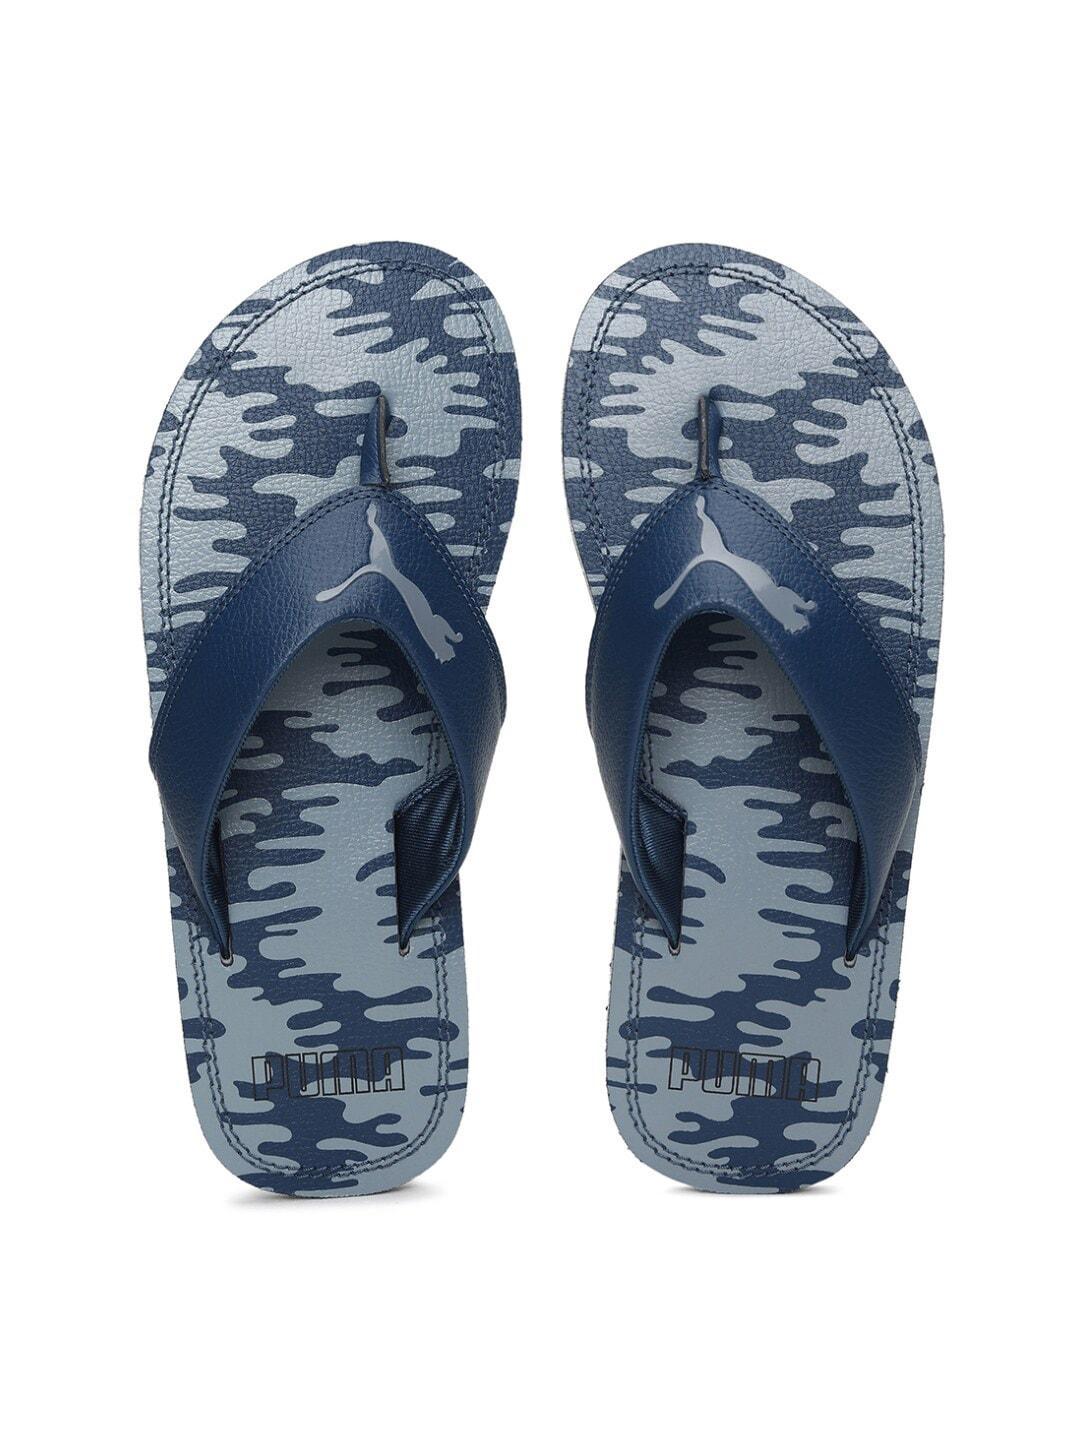 Puma Men Blue & Grey Colourblocked Thong Flip-Flops